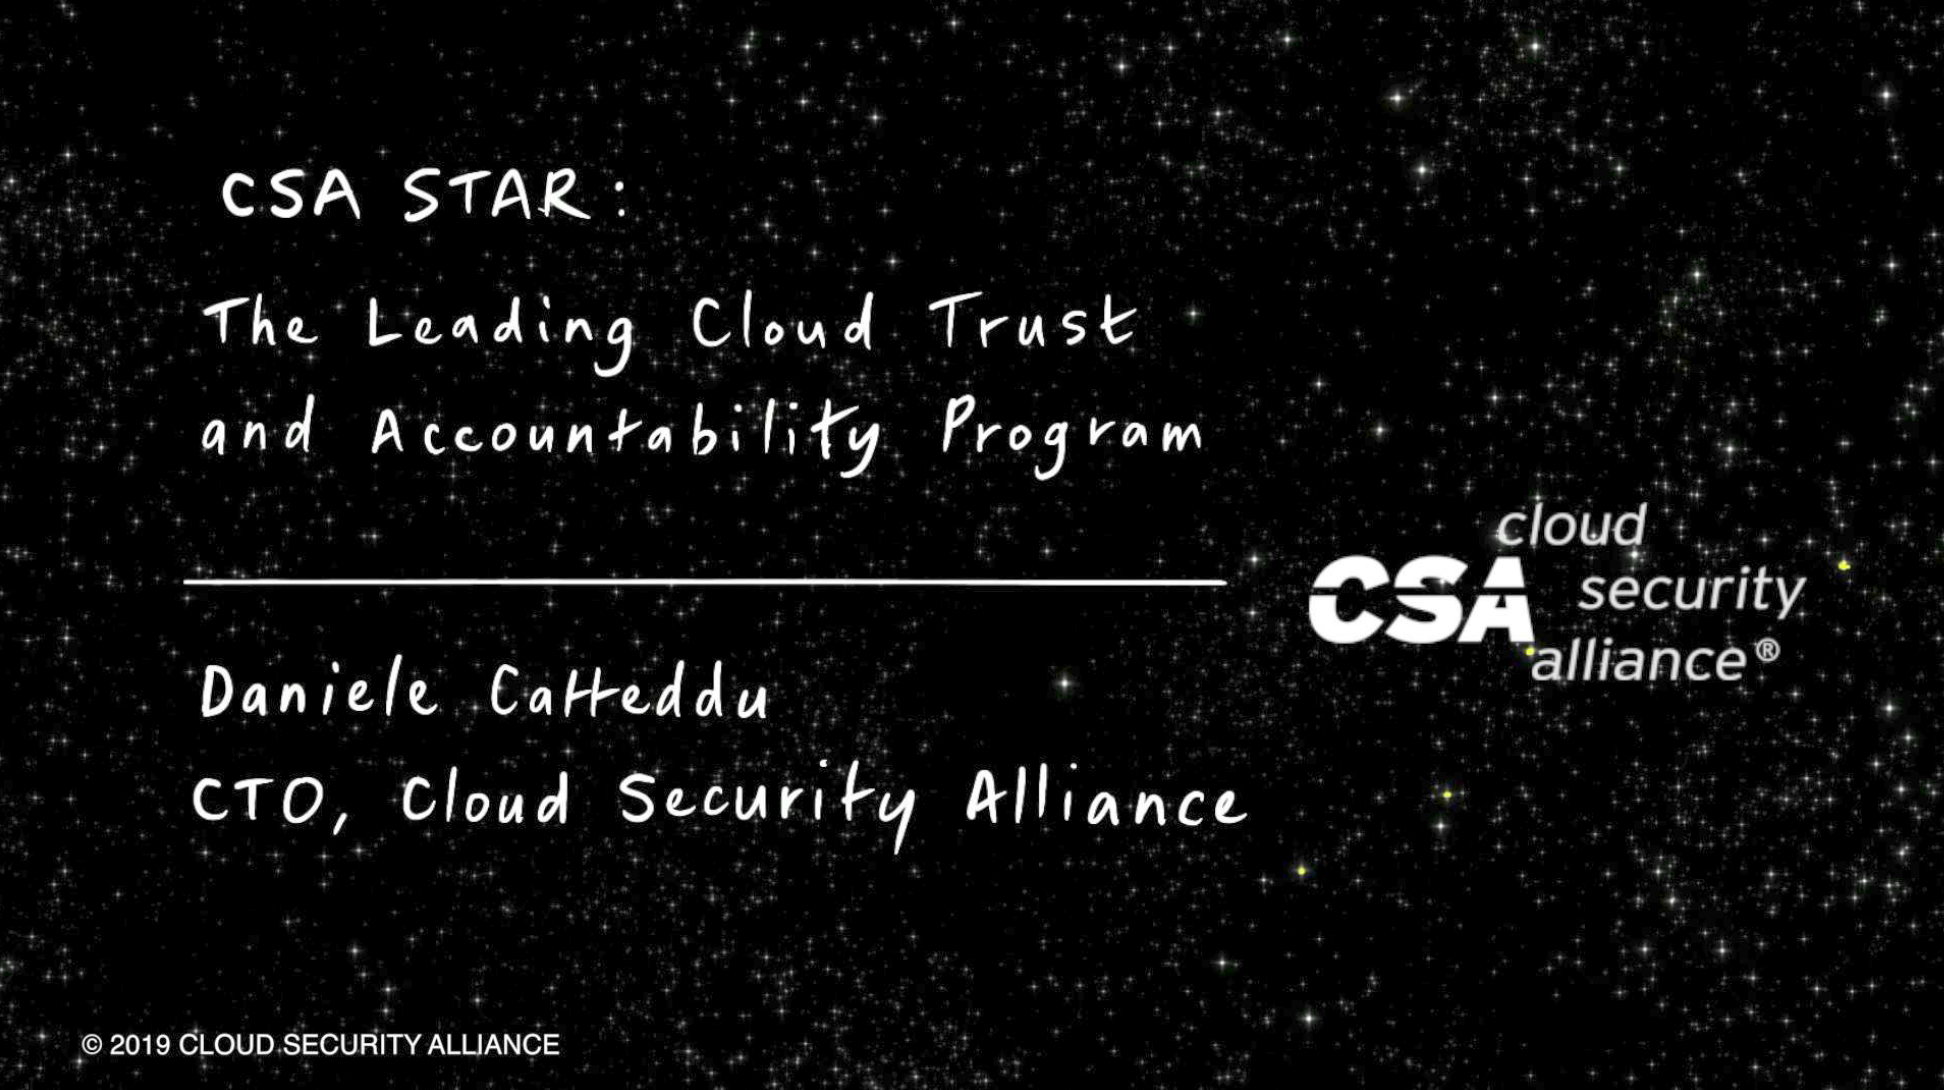 CSA STAR: The Leading Cloud Trust and Accountability Program